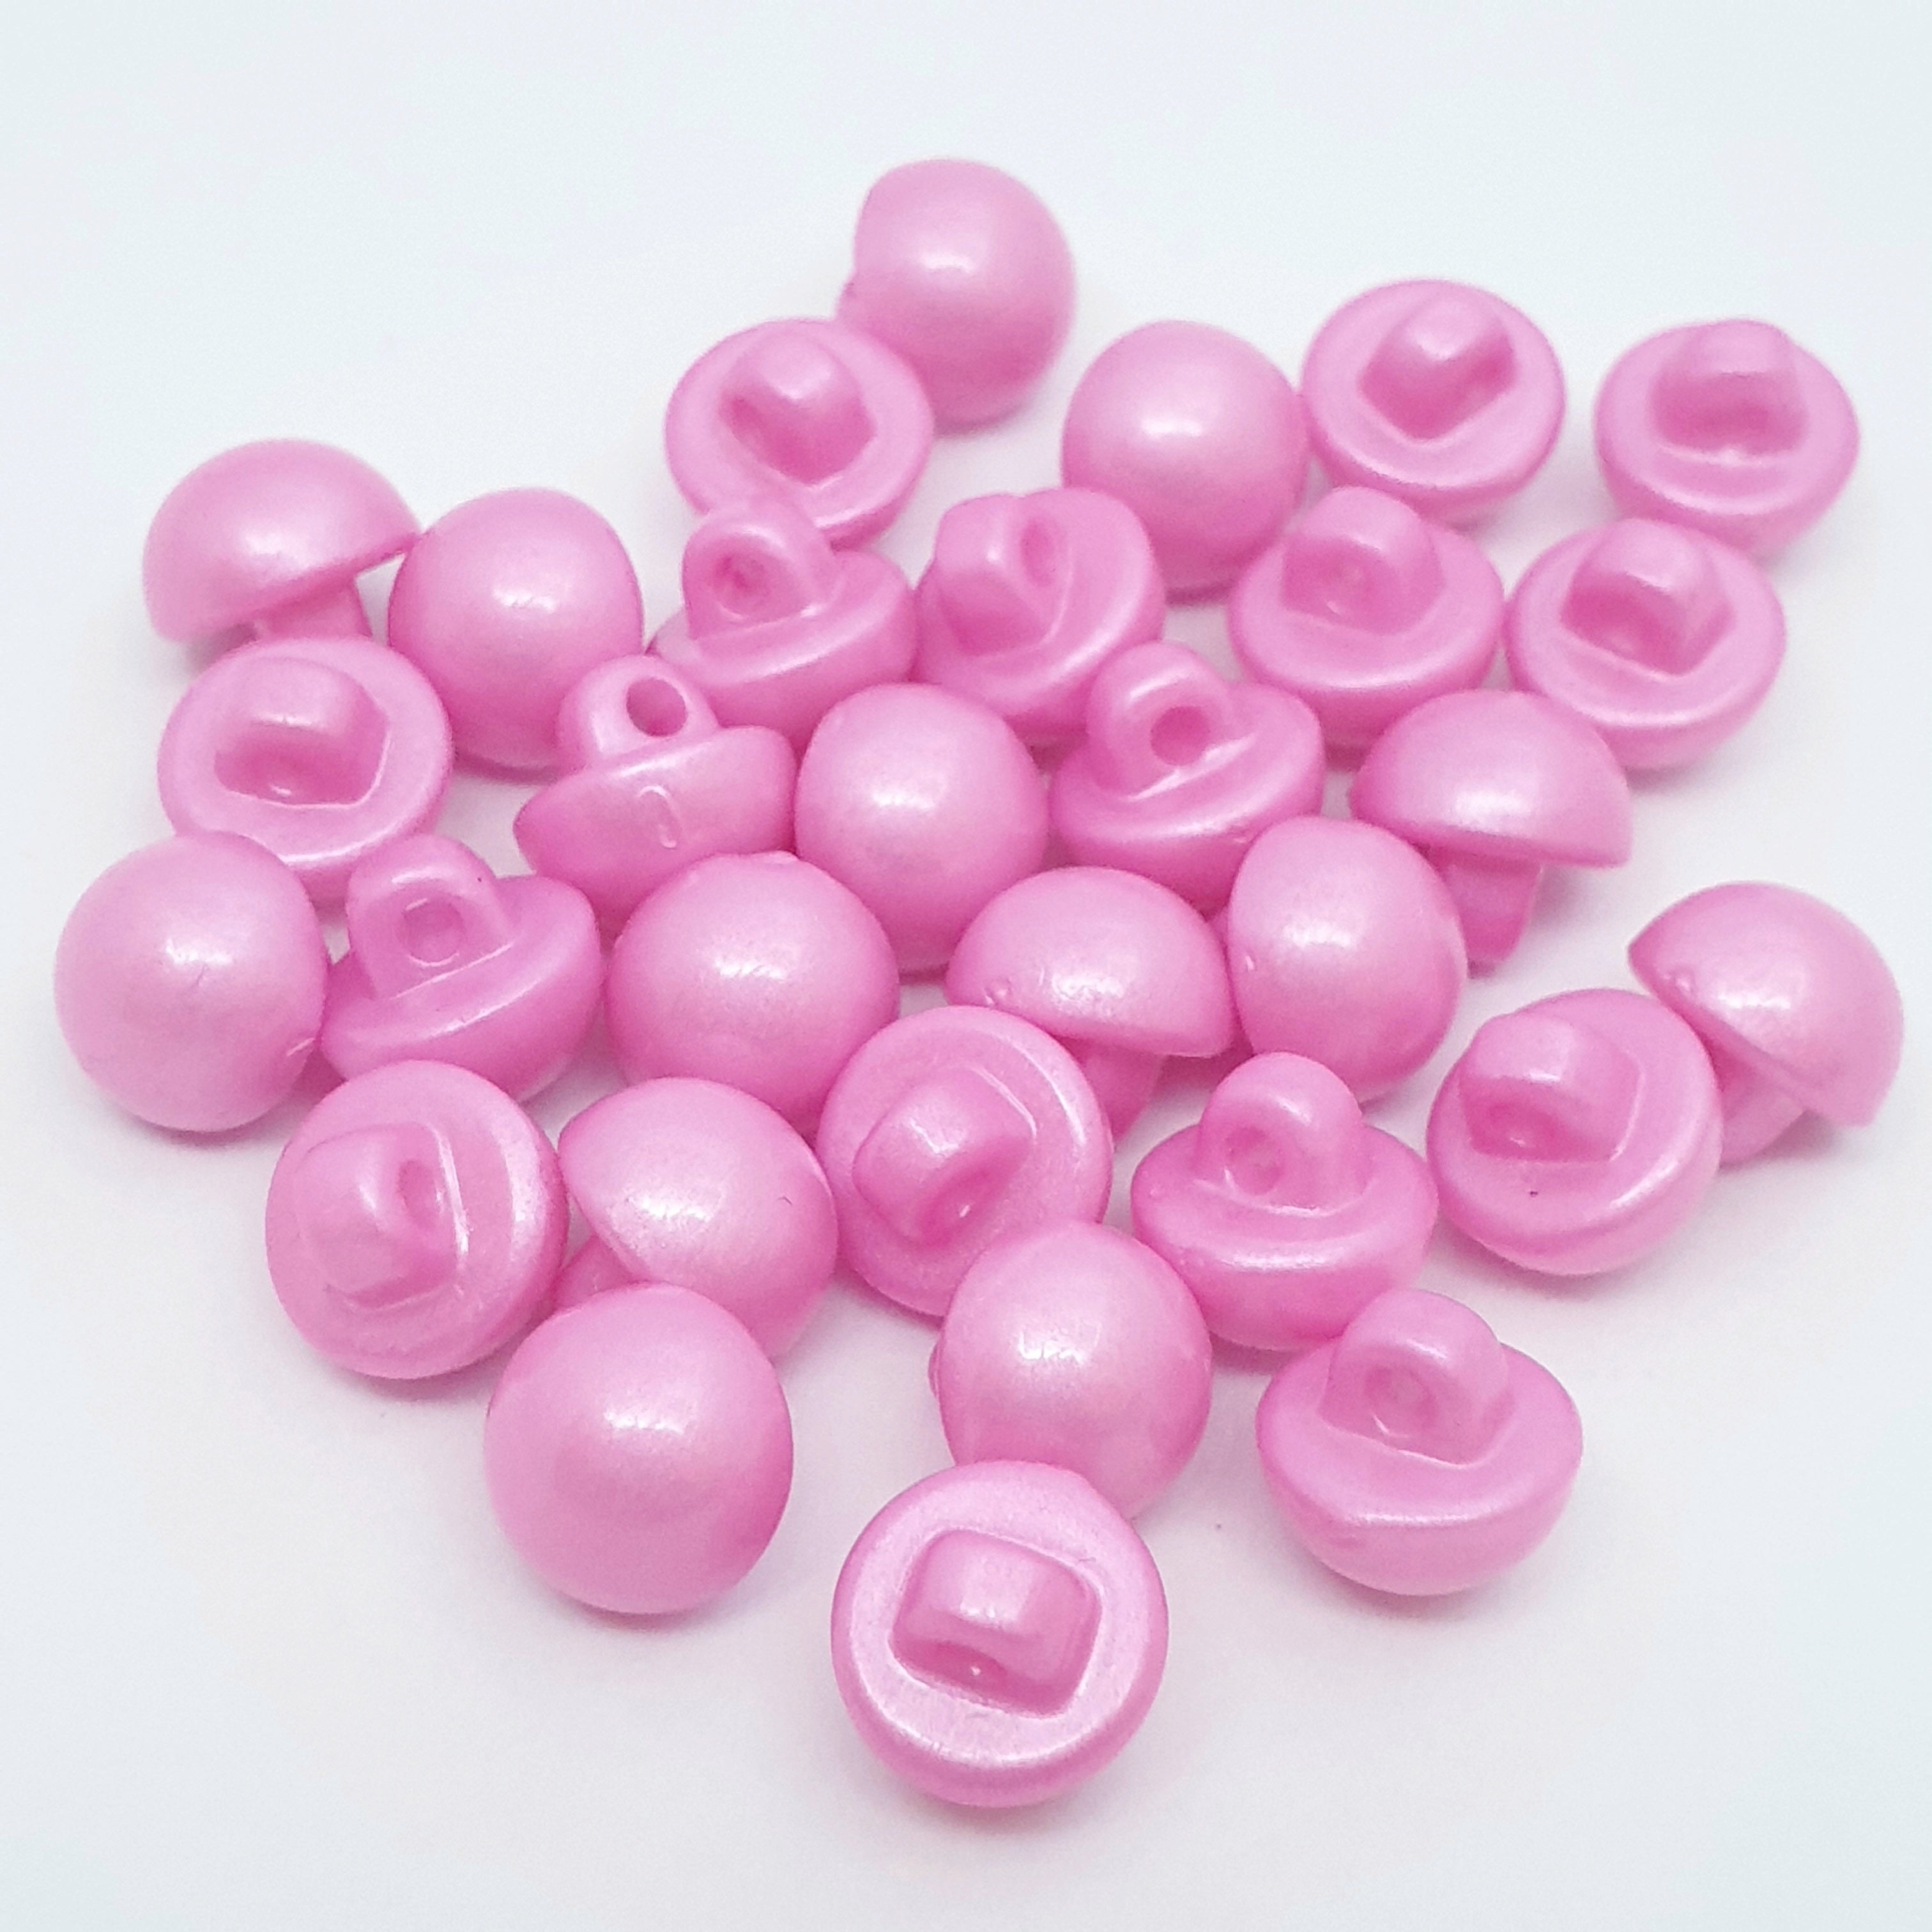 MajorCrafts 30pcs 8mm Light Rose Pink High-Grade Acrylic Small Round Sewing Mushroom Shank Buttons